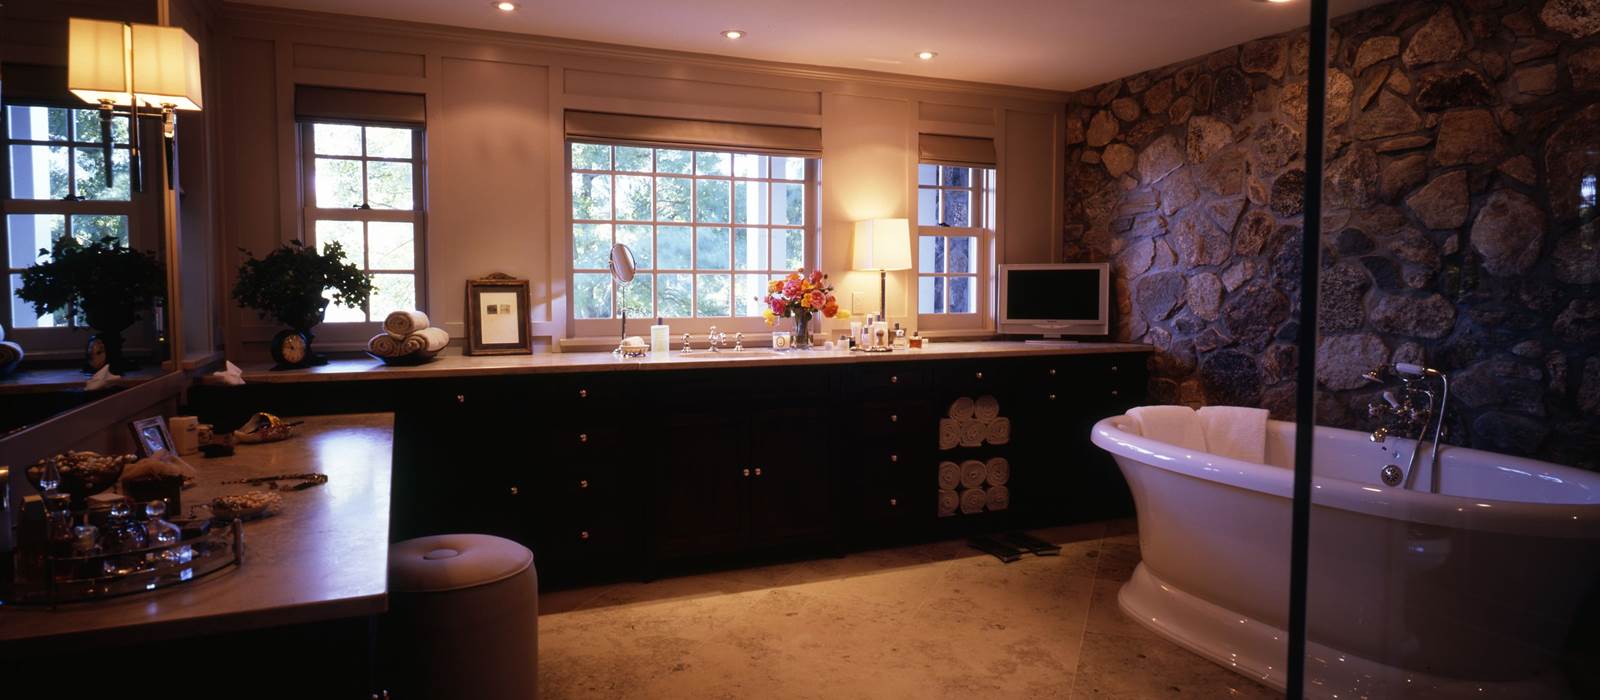 Lake Cottage - Master Bathroom with Freestanding Bathtub and Large Vanity